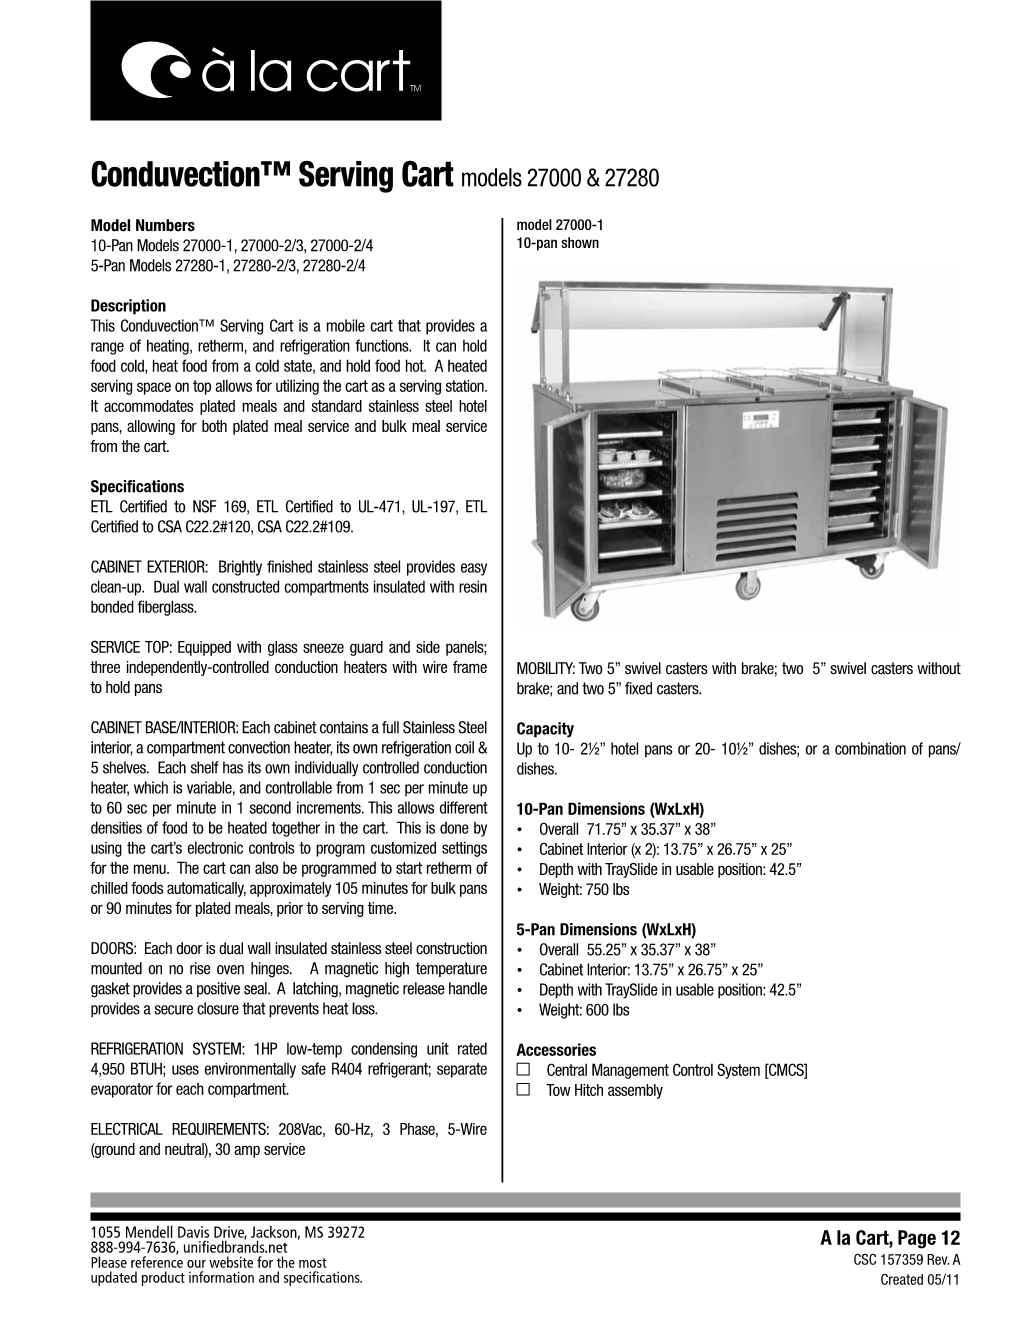 Conduvection™ Serving Cart Models 27000 & 27280